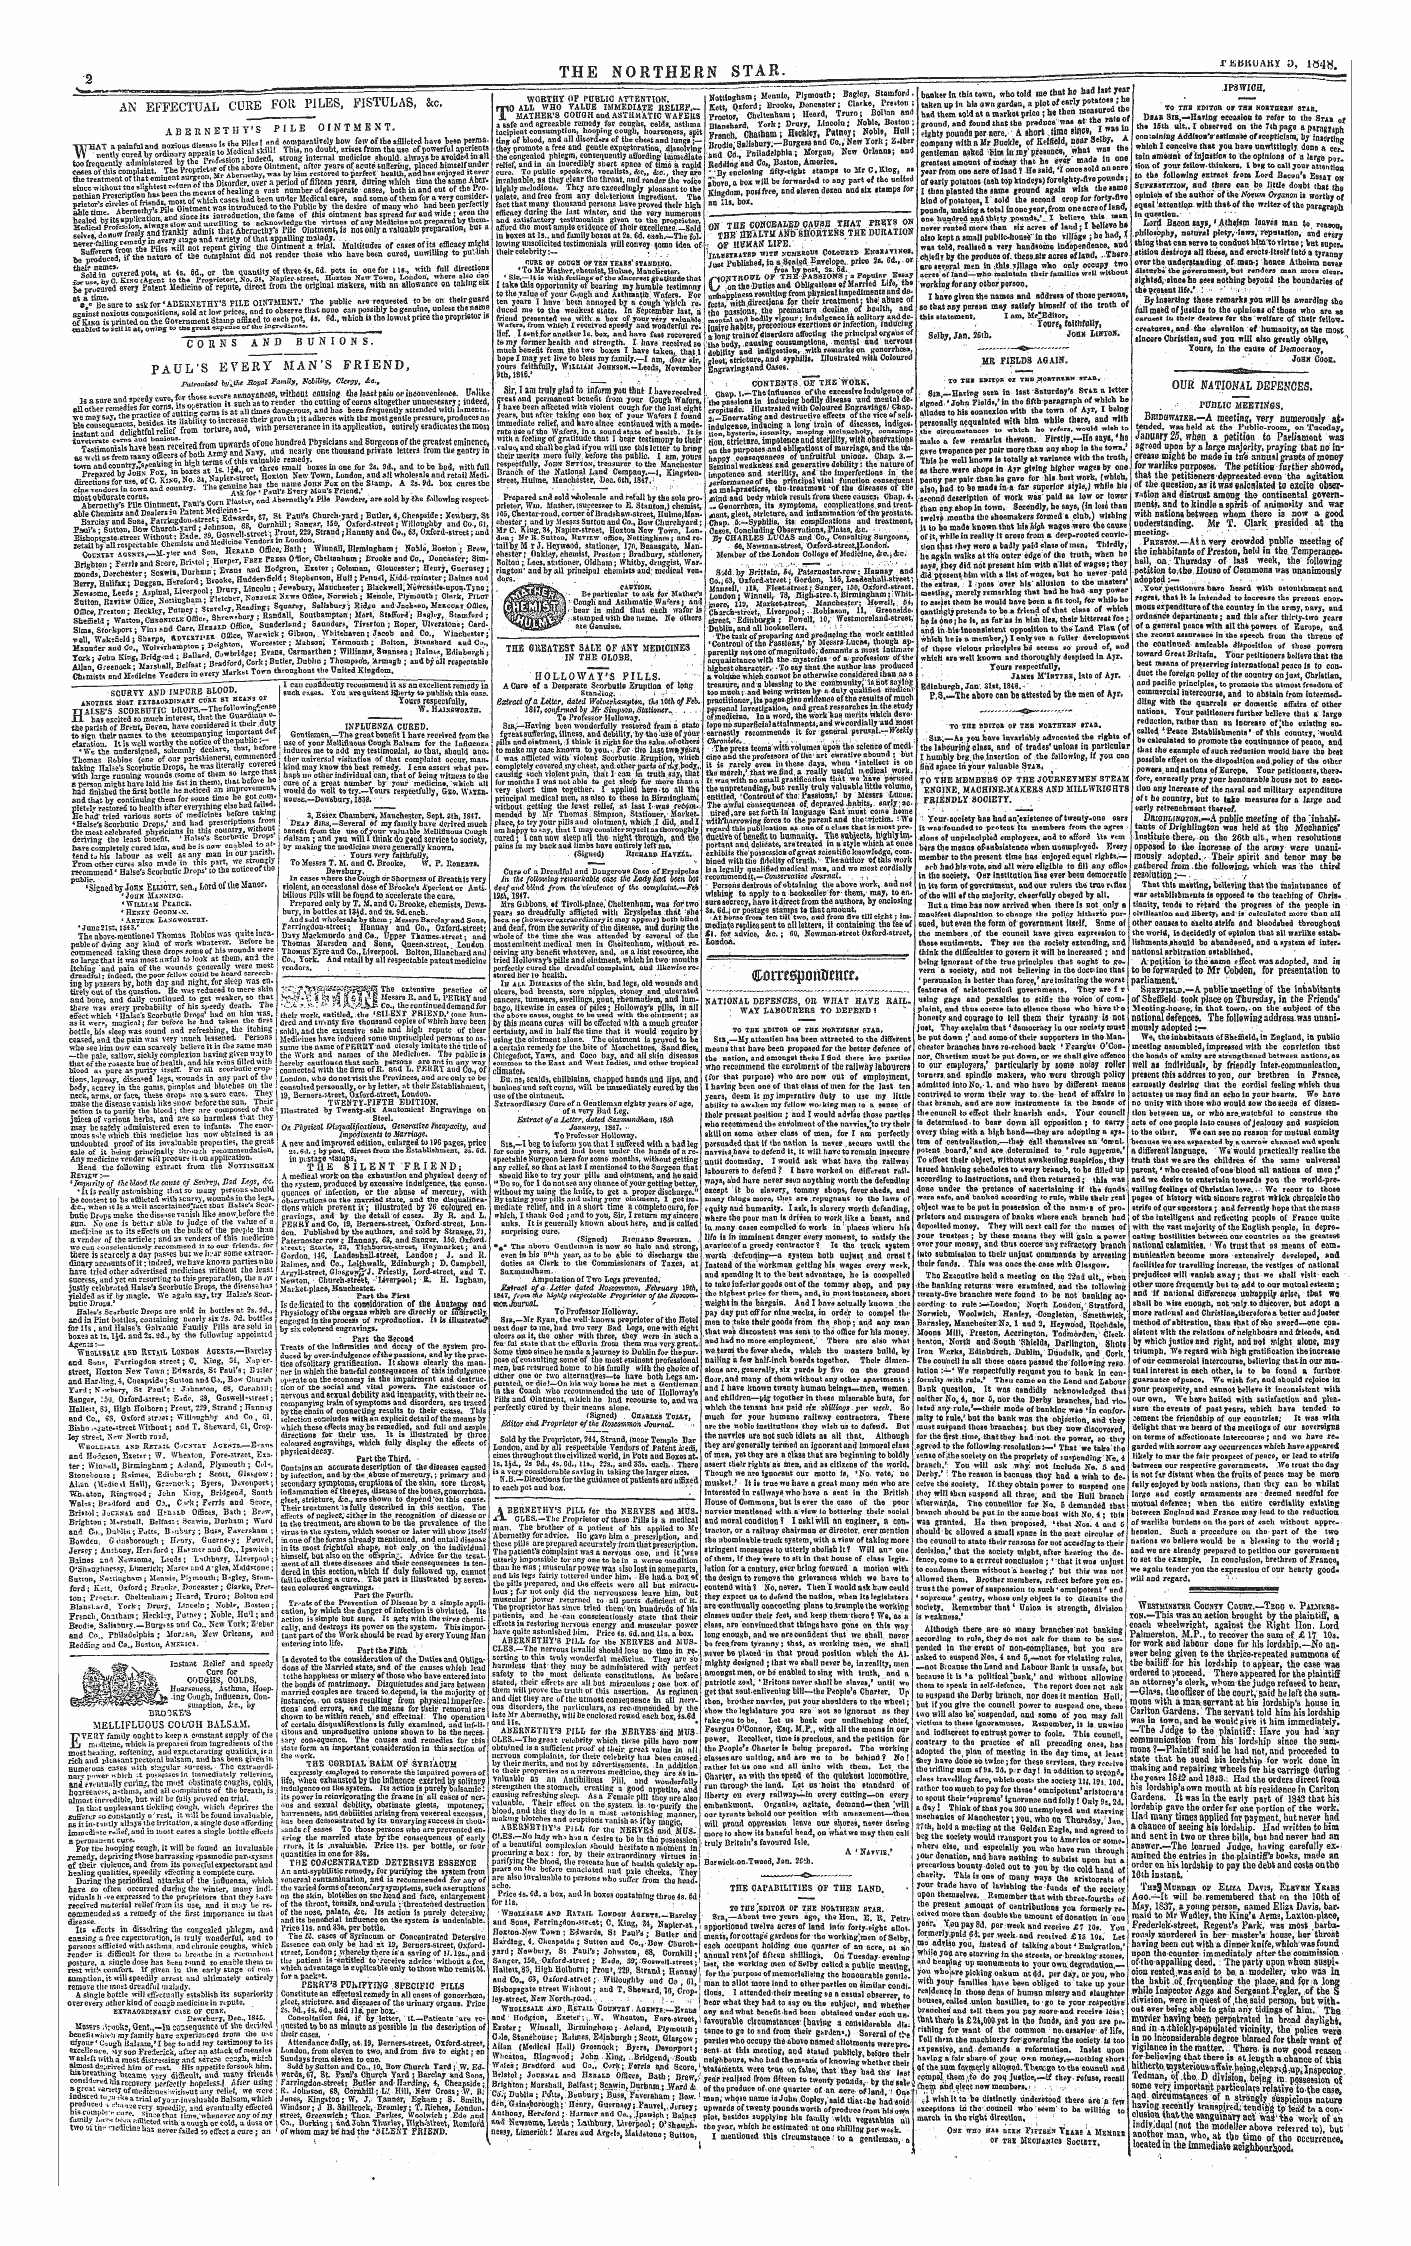 Northern Star (1837-1852): jS F Y, 1st edition - ( Kmttspqlttfaitt*